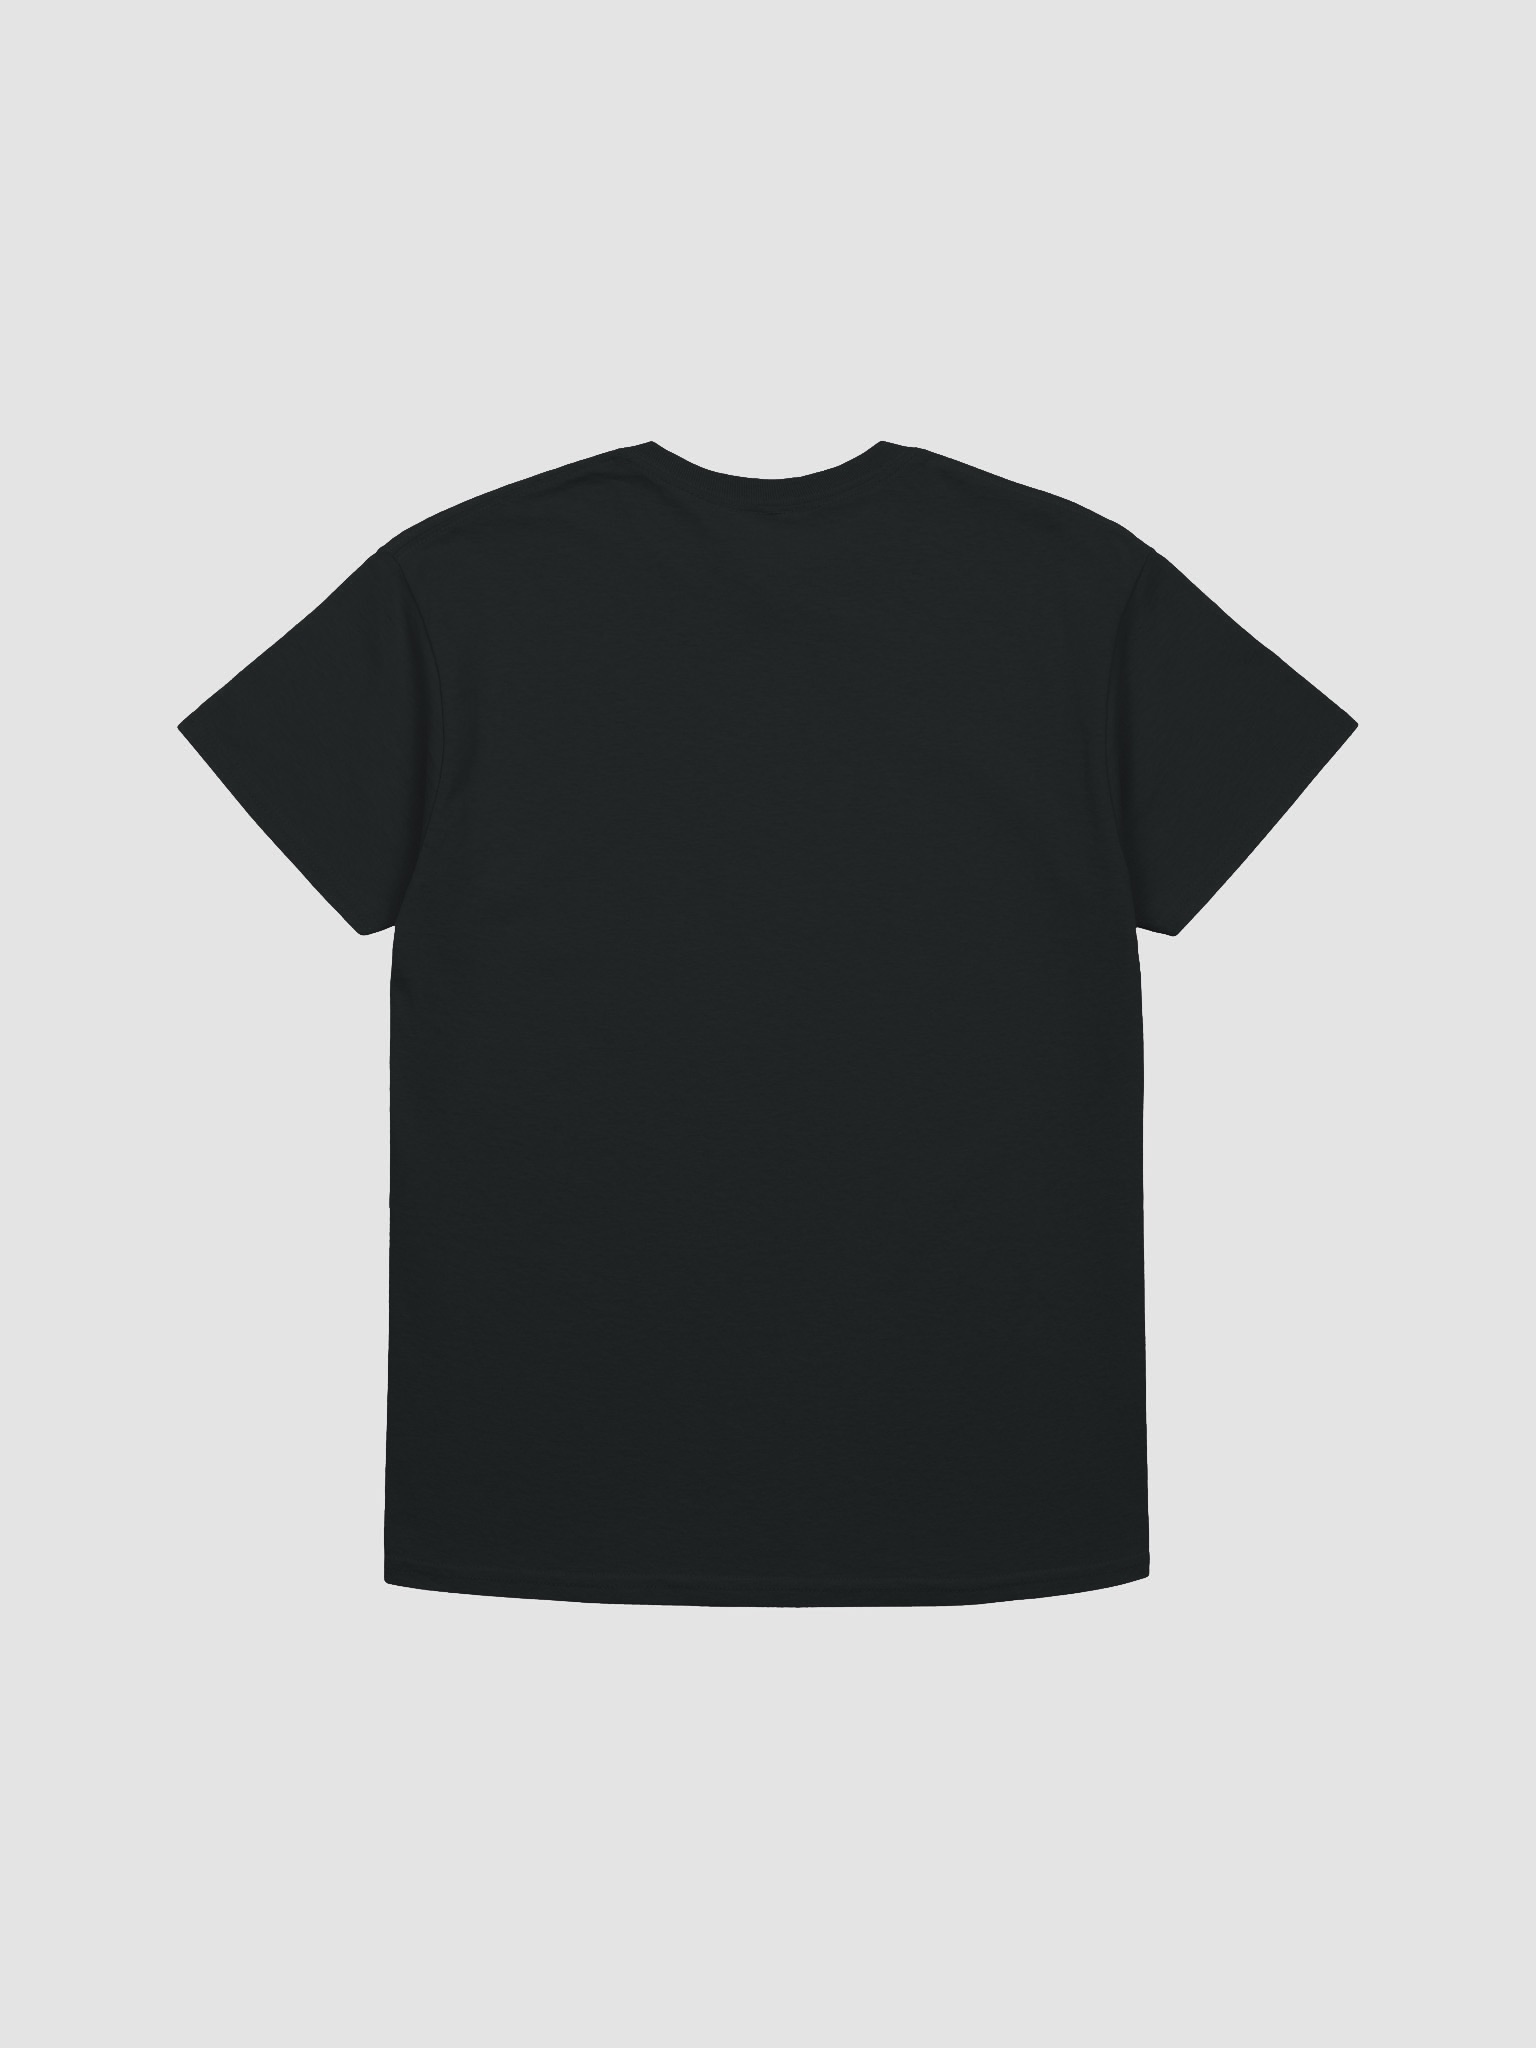 MK Lick T-Shirt (Dark Colors)